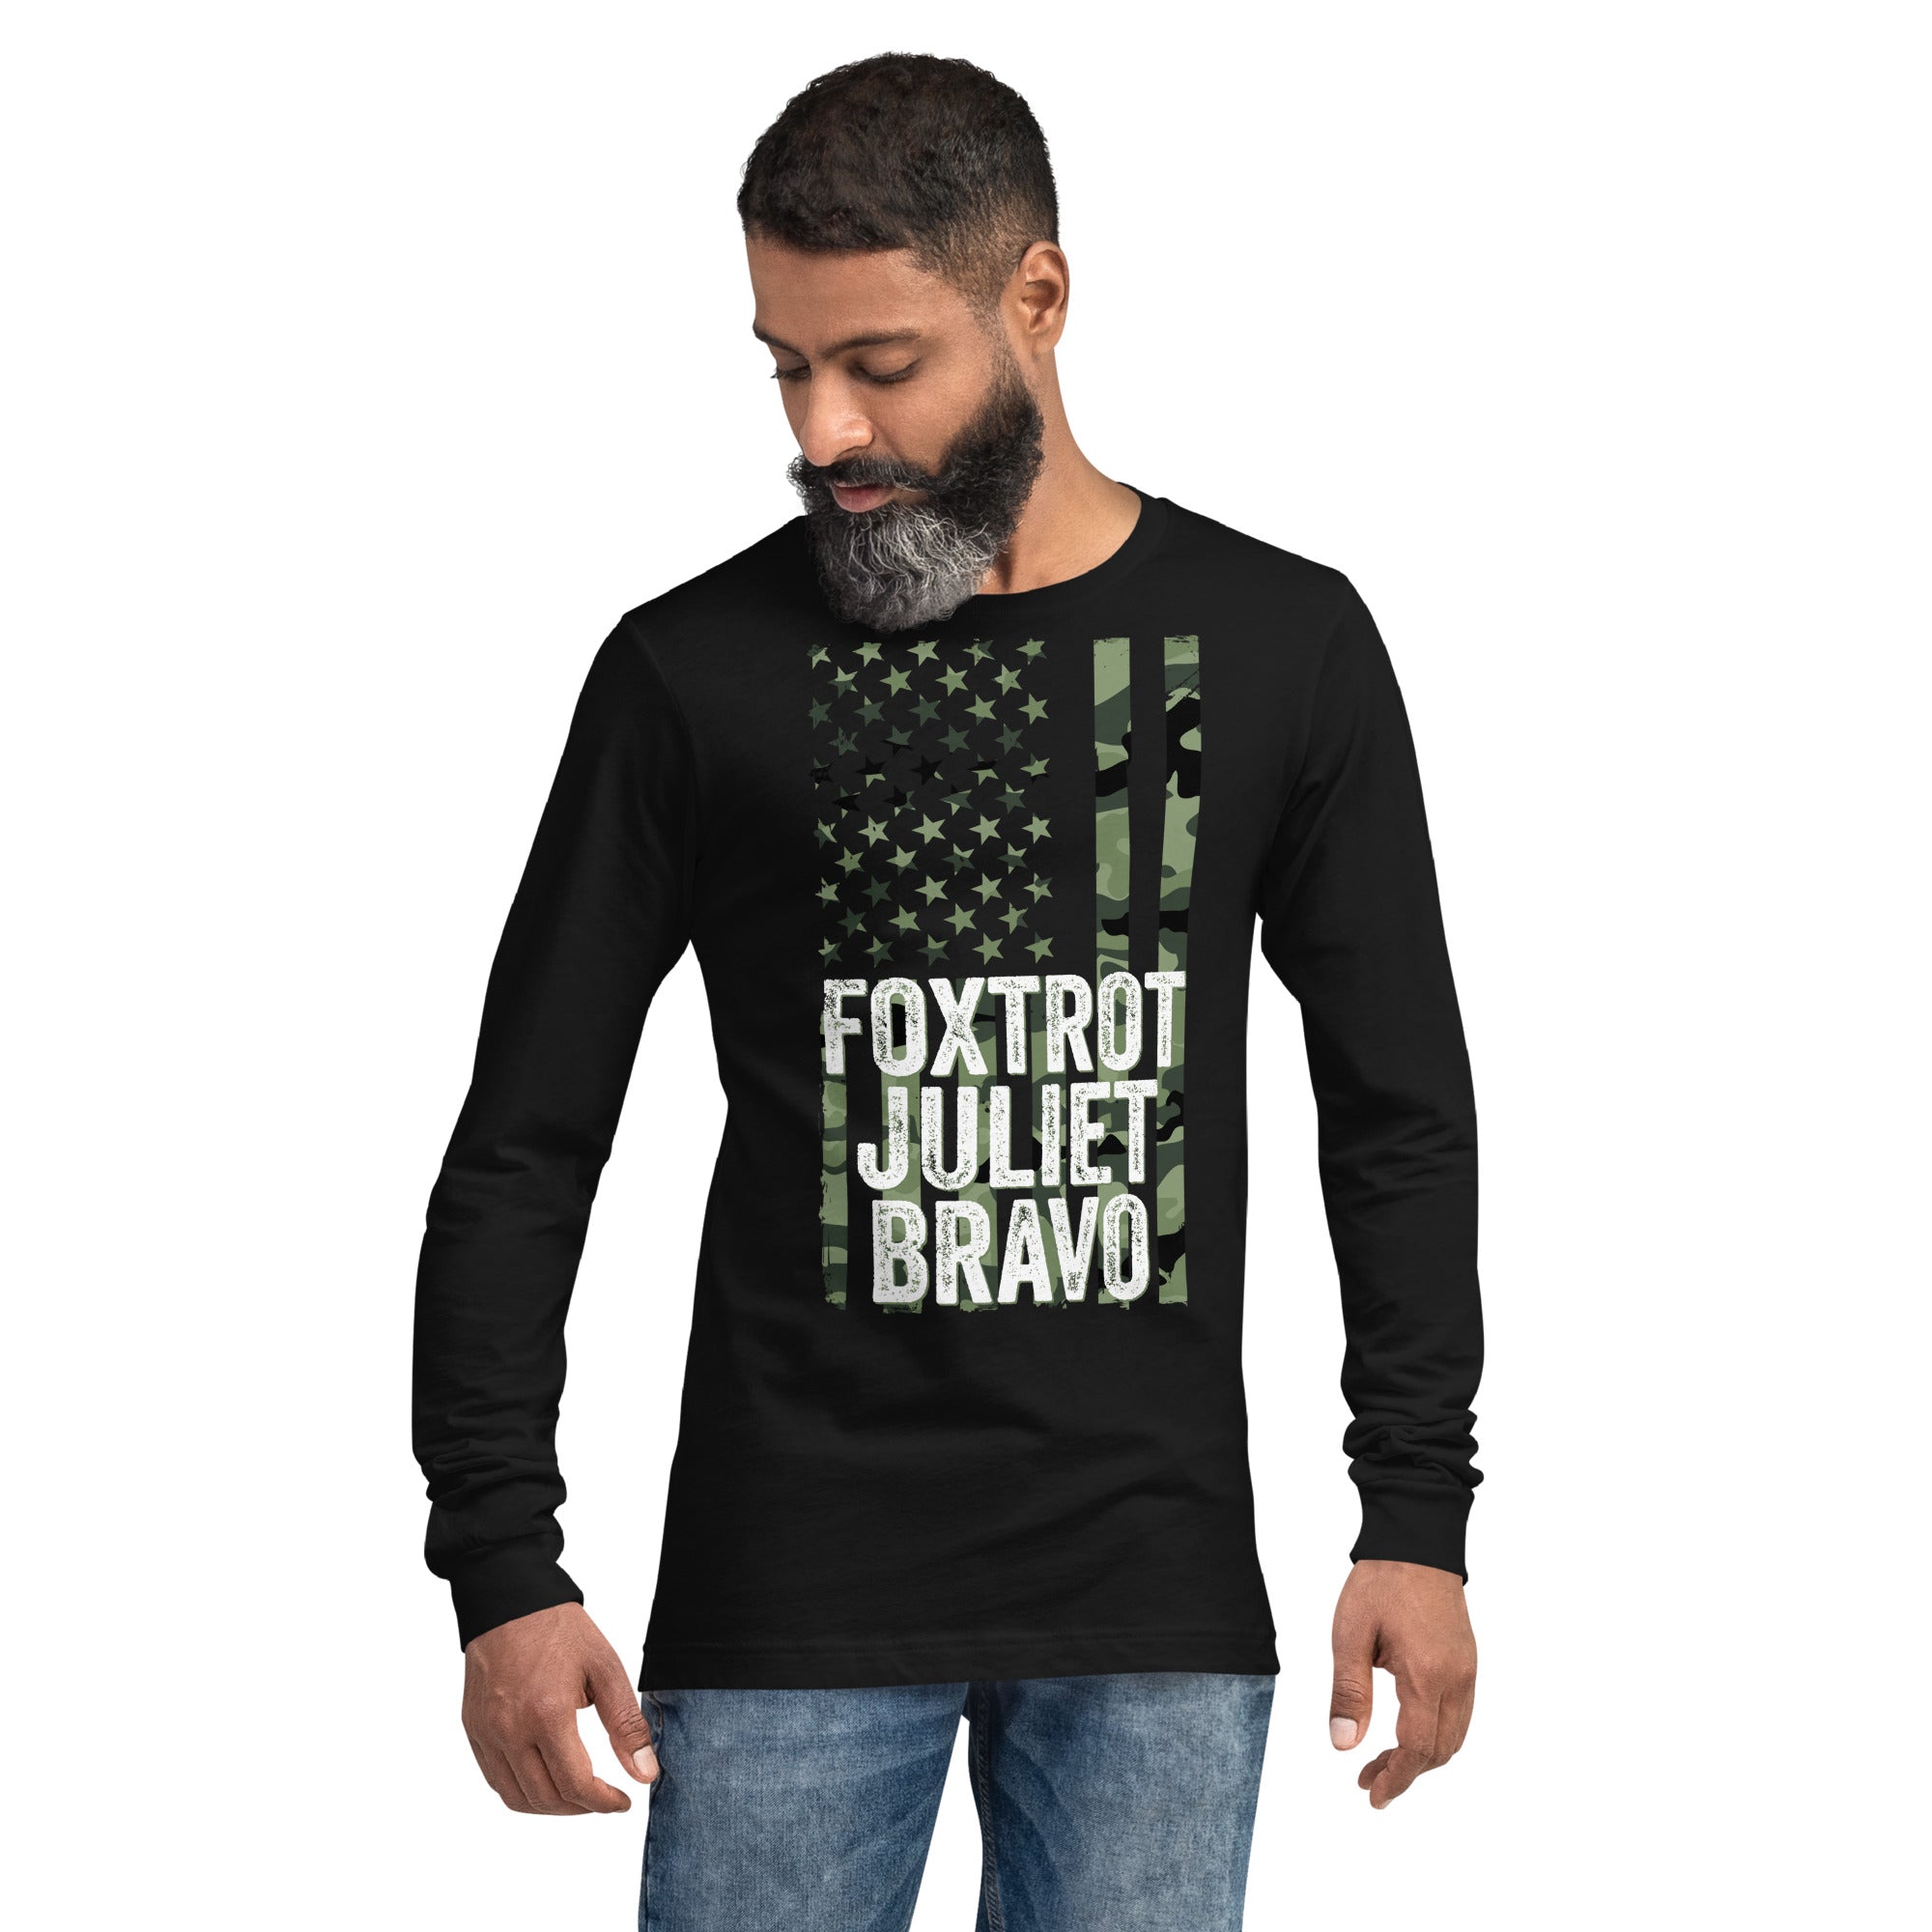 FJB Long Sleeve Shirt, #FJB, Fjb Pro America Shirt, Foxtrot Juliet Bravo, Military Alphabet Code Camo Pro America T Shirt FJB, Anti Biden